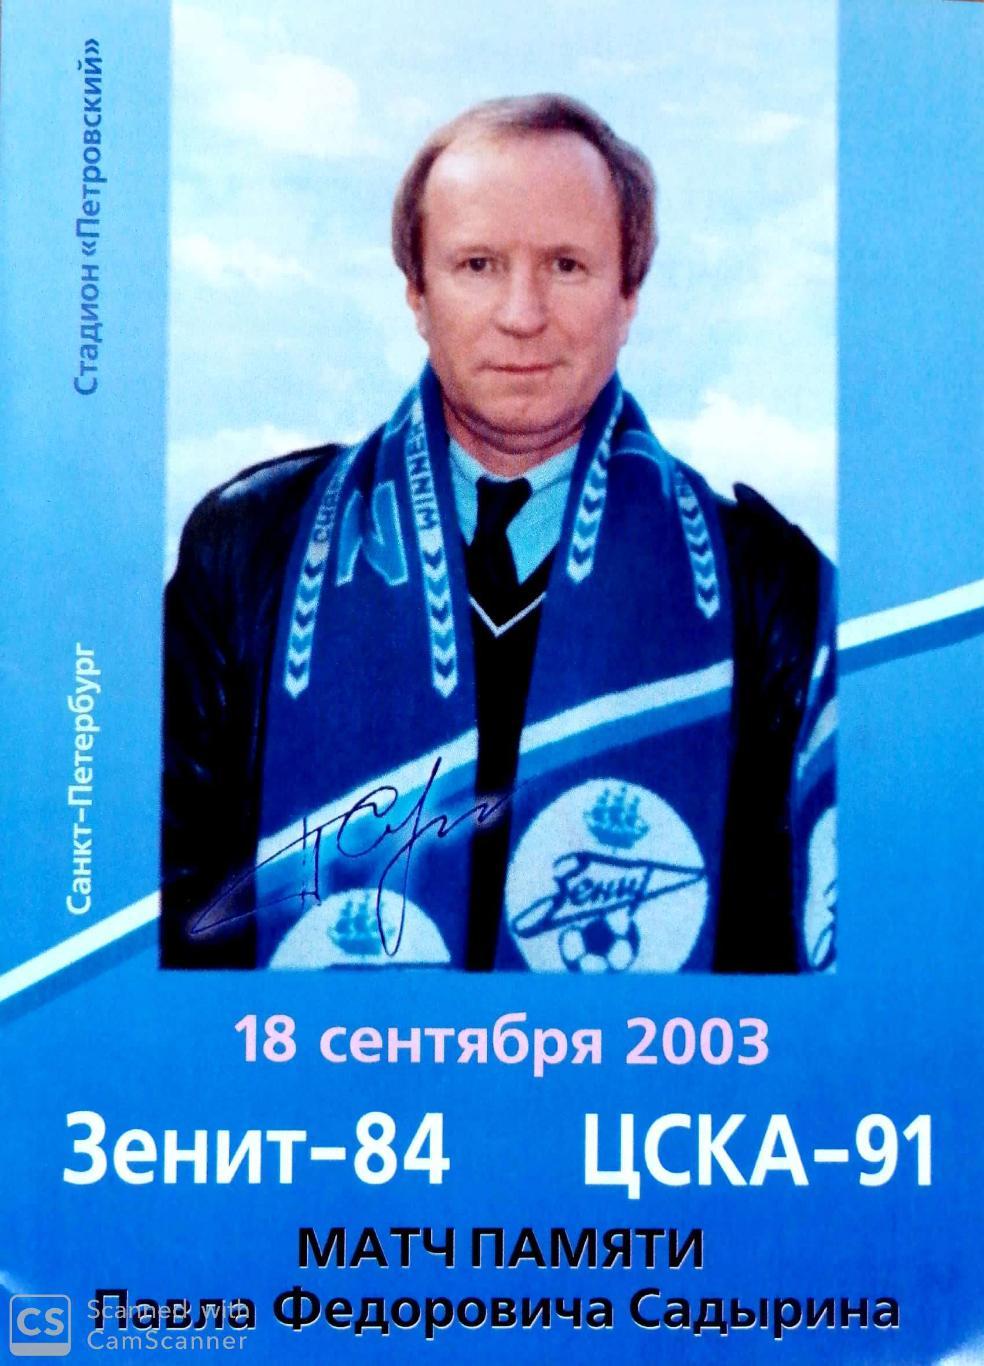 Матч памяти Садырина. ЗЕНИТ-84 - ЦСКА-91 (18.09.2003)